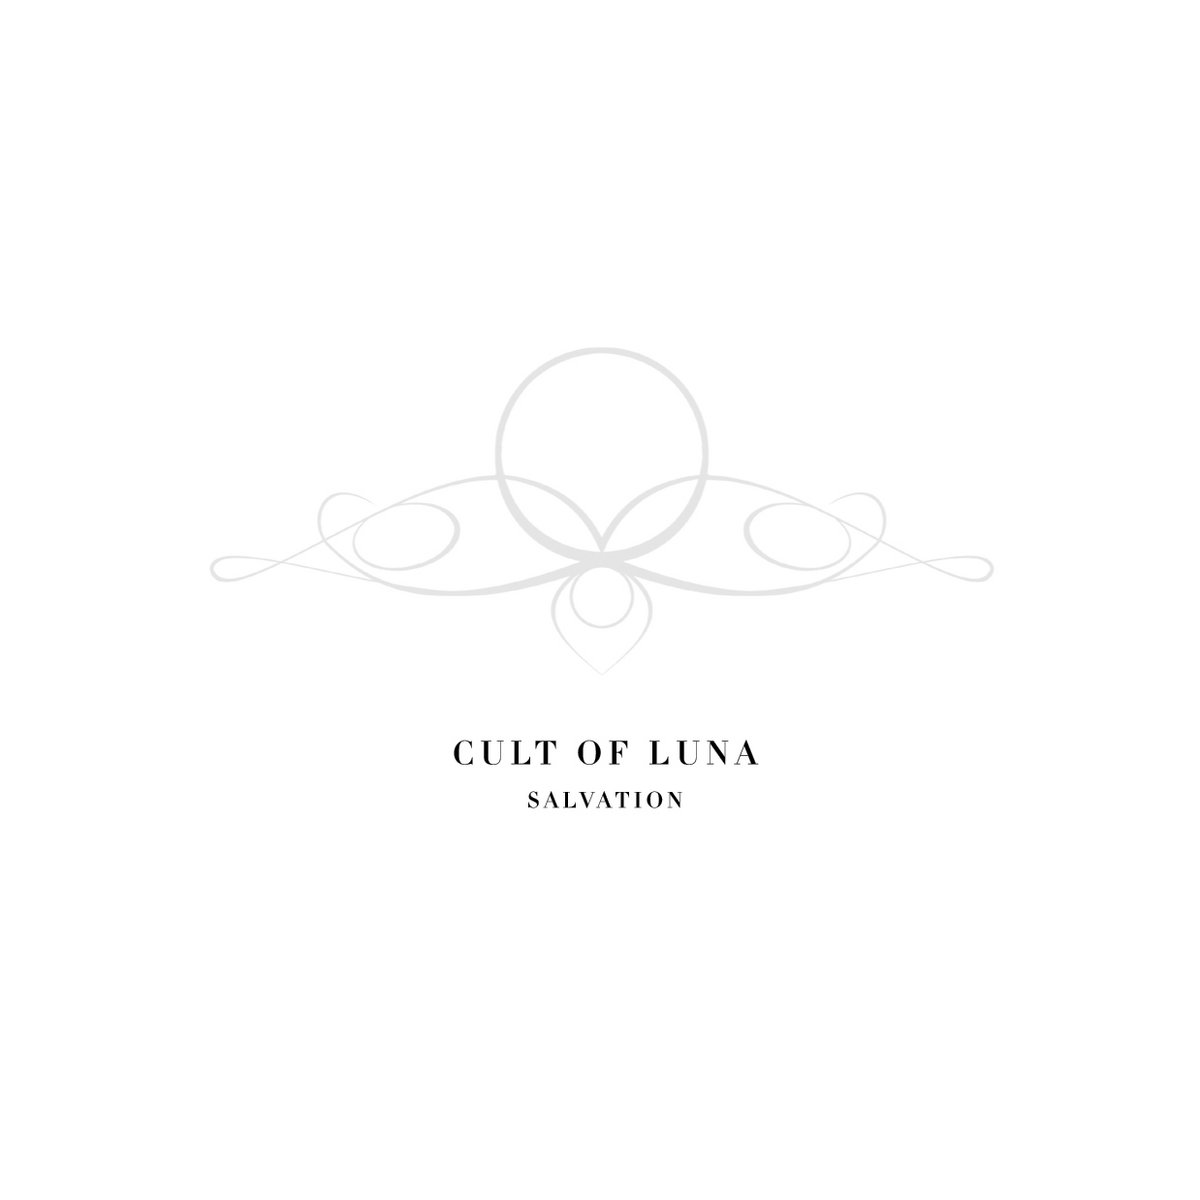 Cult of Luna Salvation cover artwork